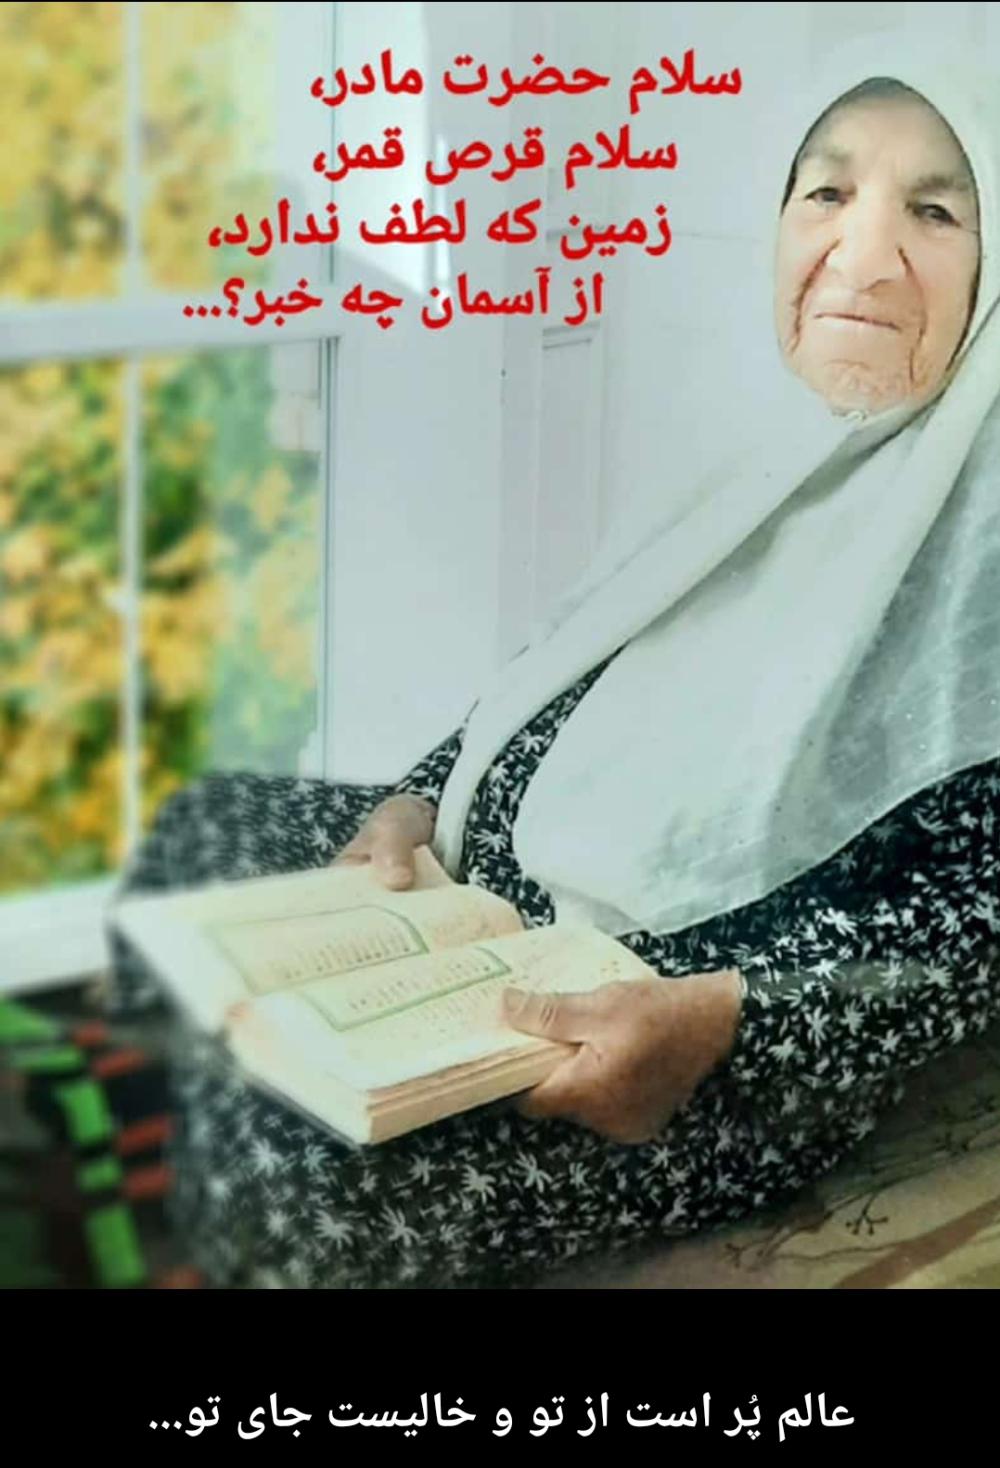 یادبود مرحومه حاجیه خانم خیرالنساء الهی